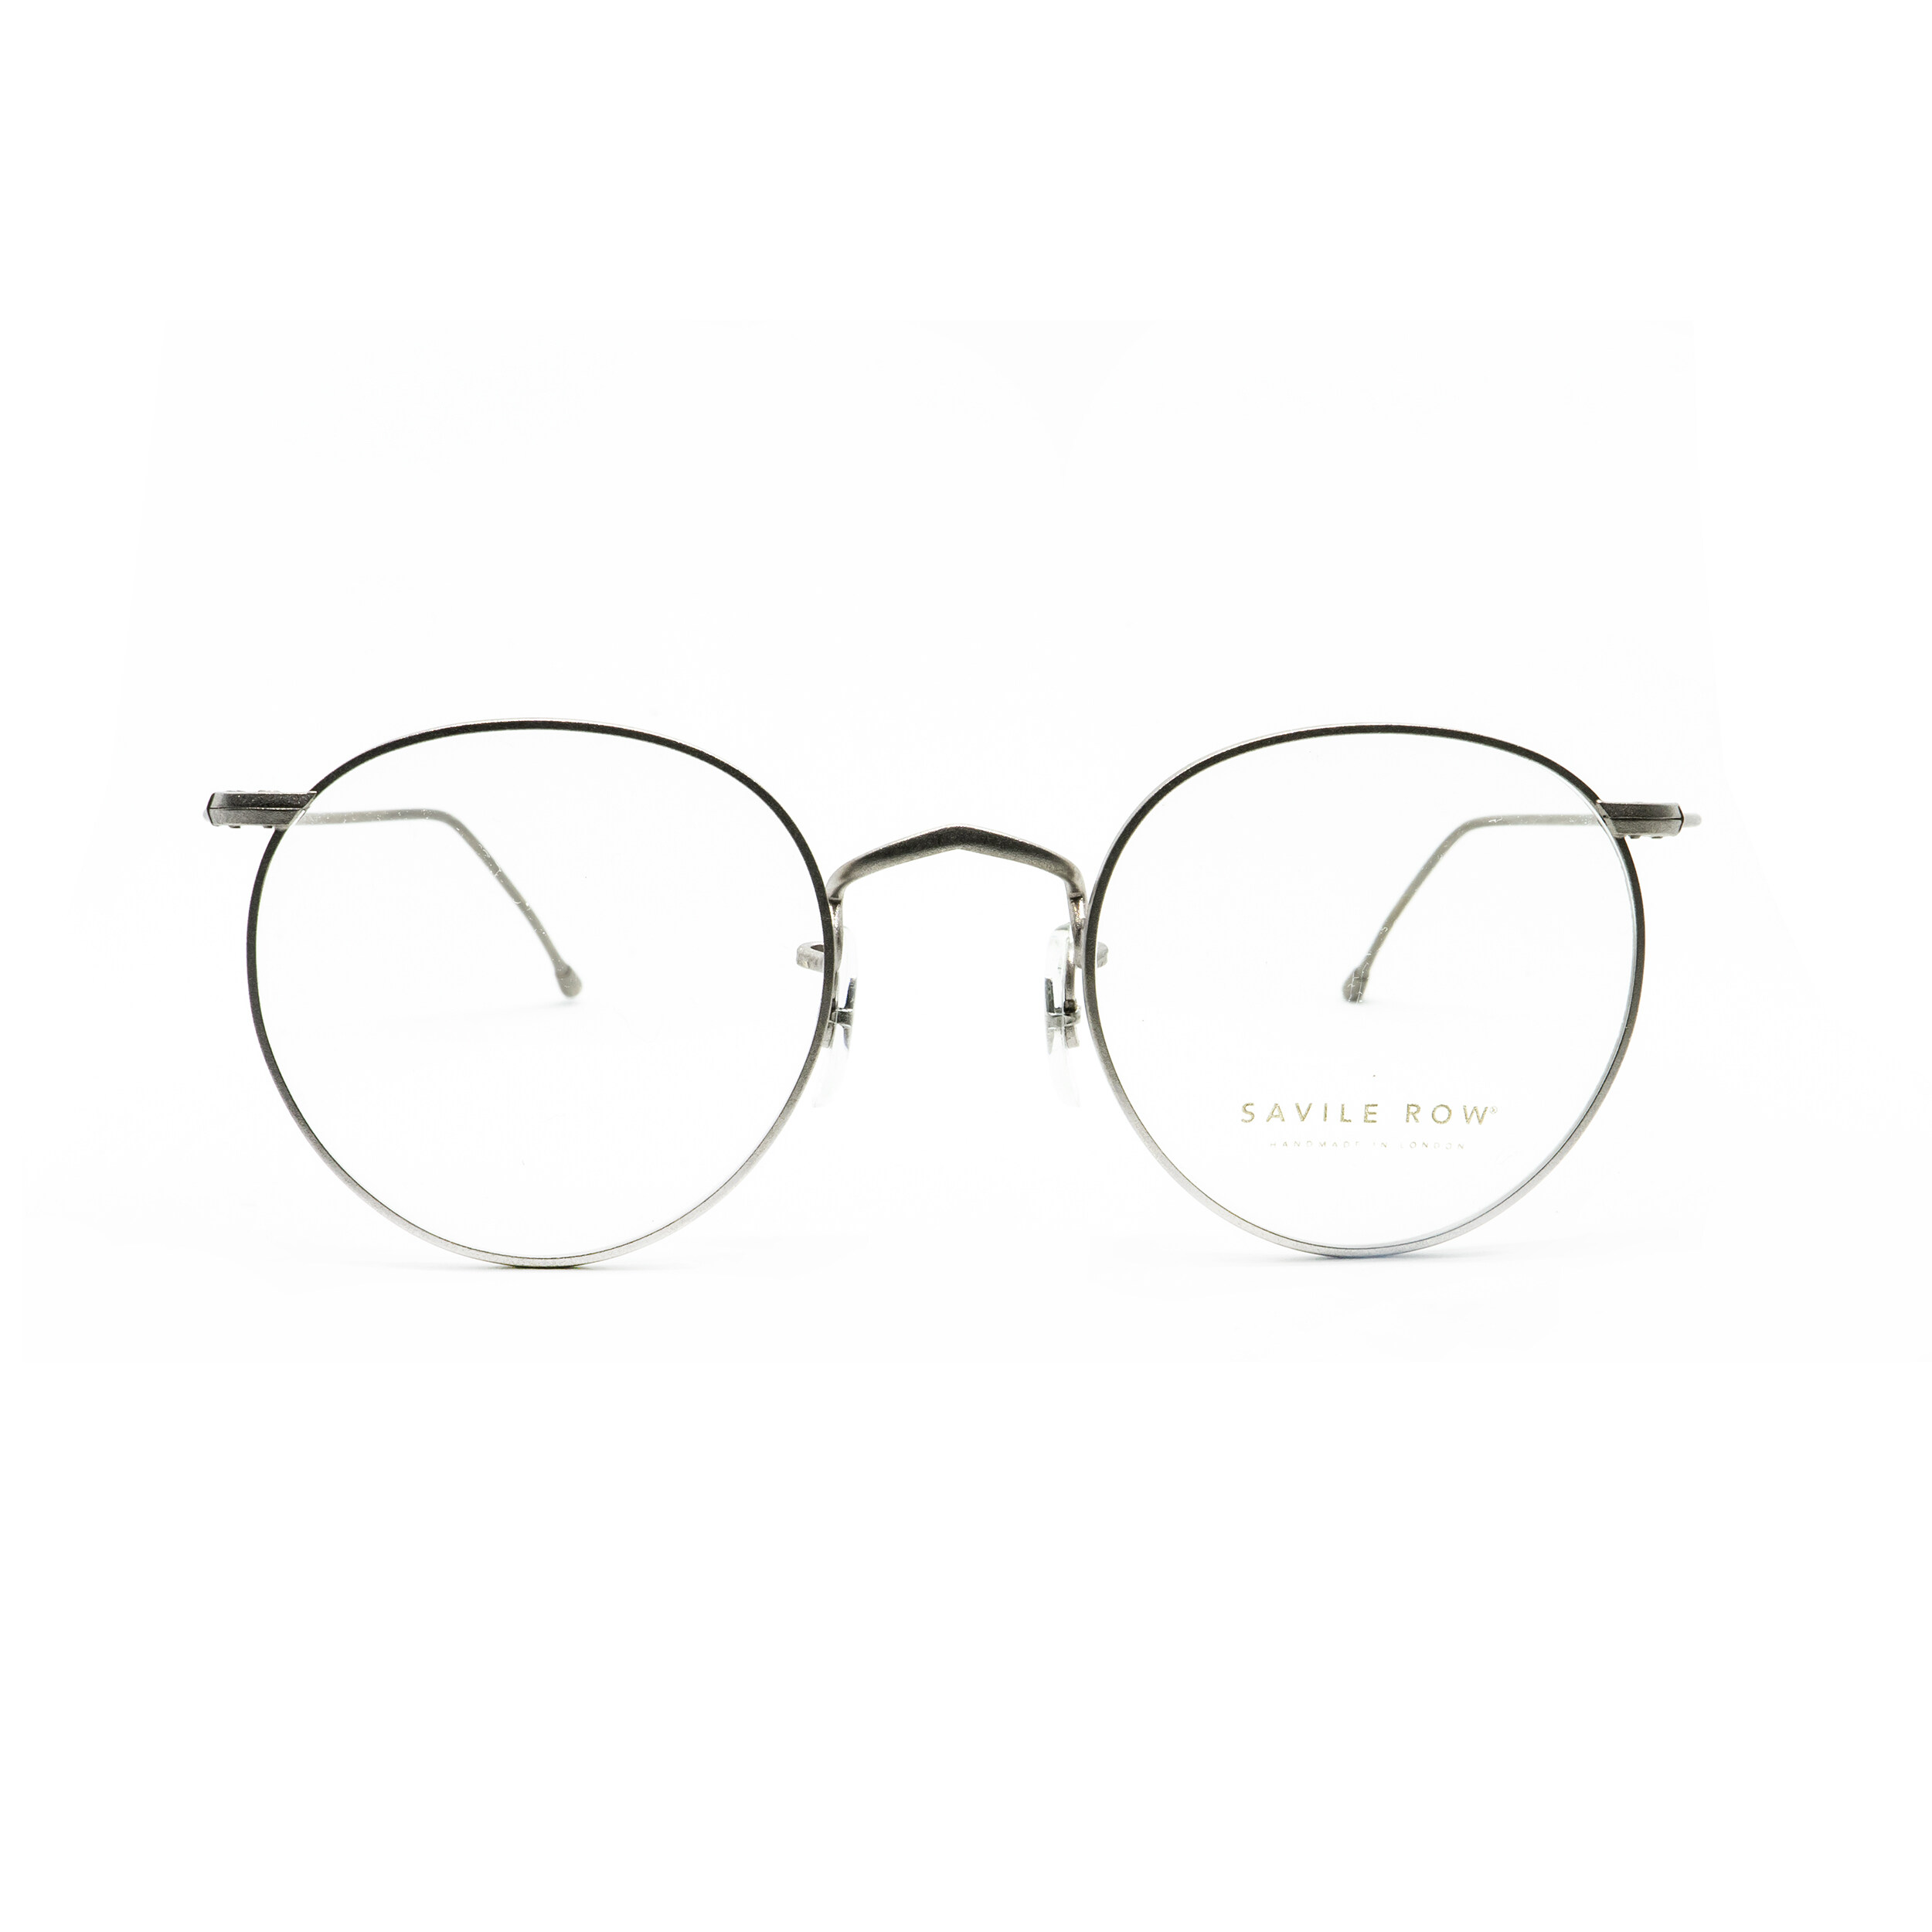 Savile Row是英國百年眼鏡品牌，哈利波特在電影中所佩戴的眼鏡就是來自此